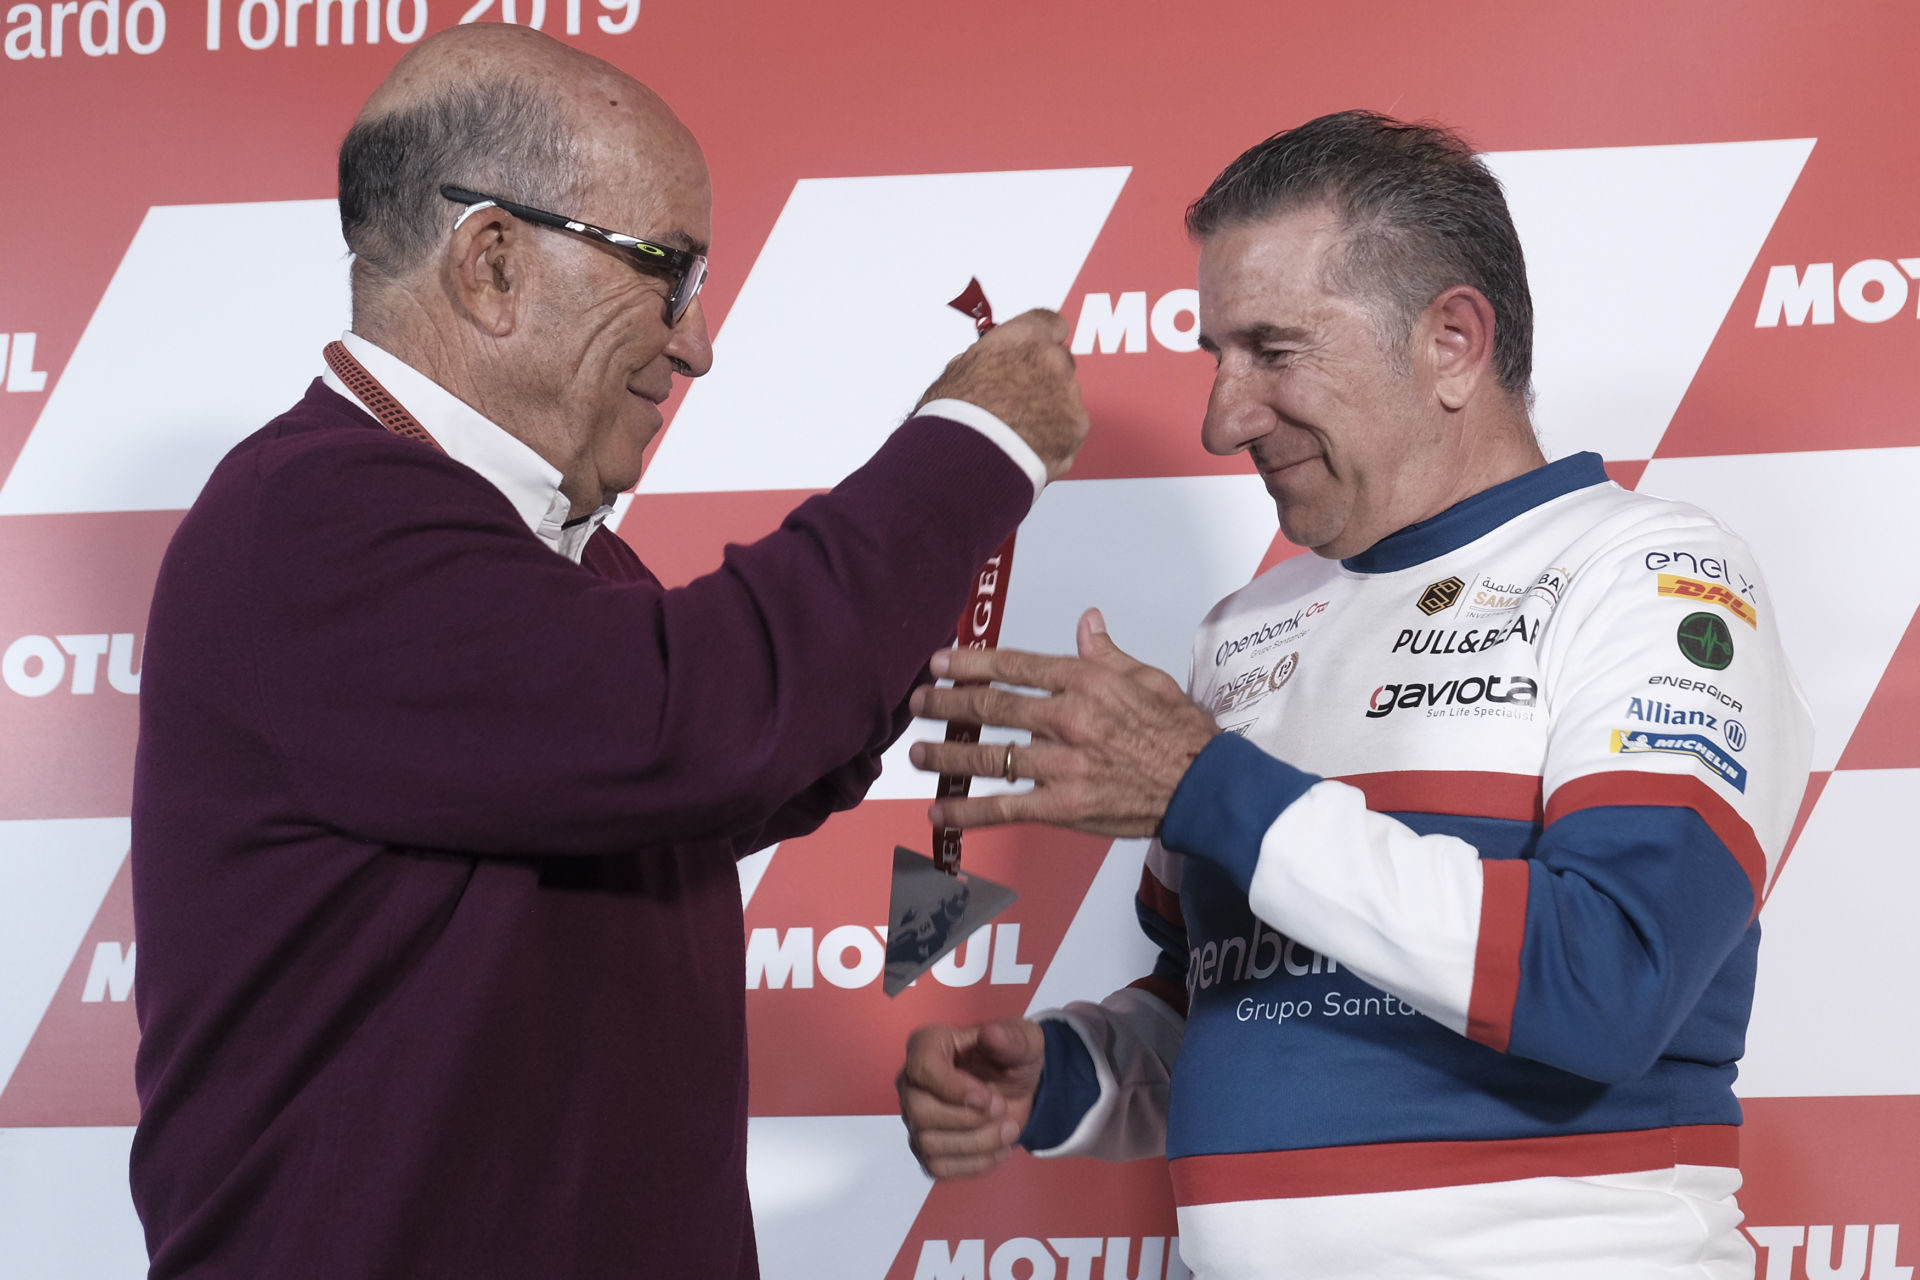 Jorge Martinez (right) receiving his MotoGP Legend medal from Dorna CEO Carmelo Ezpeleta (left) during a ceremony today in Valencia. Photo courtesy of Dorna/www.motogp.com.